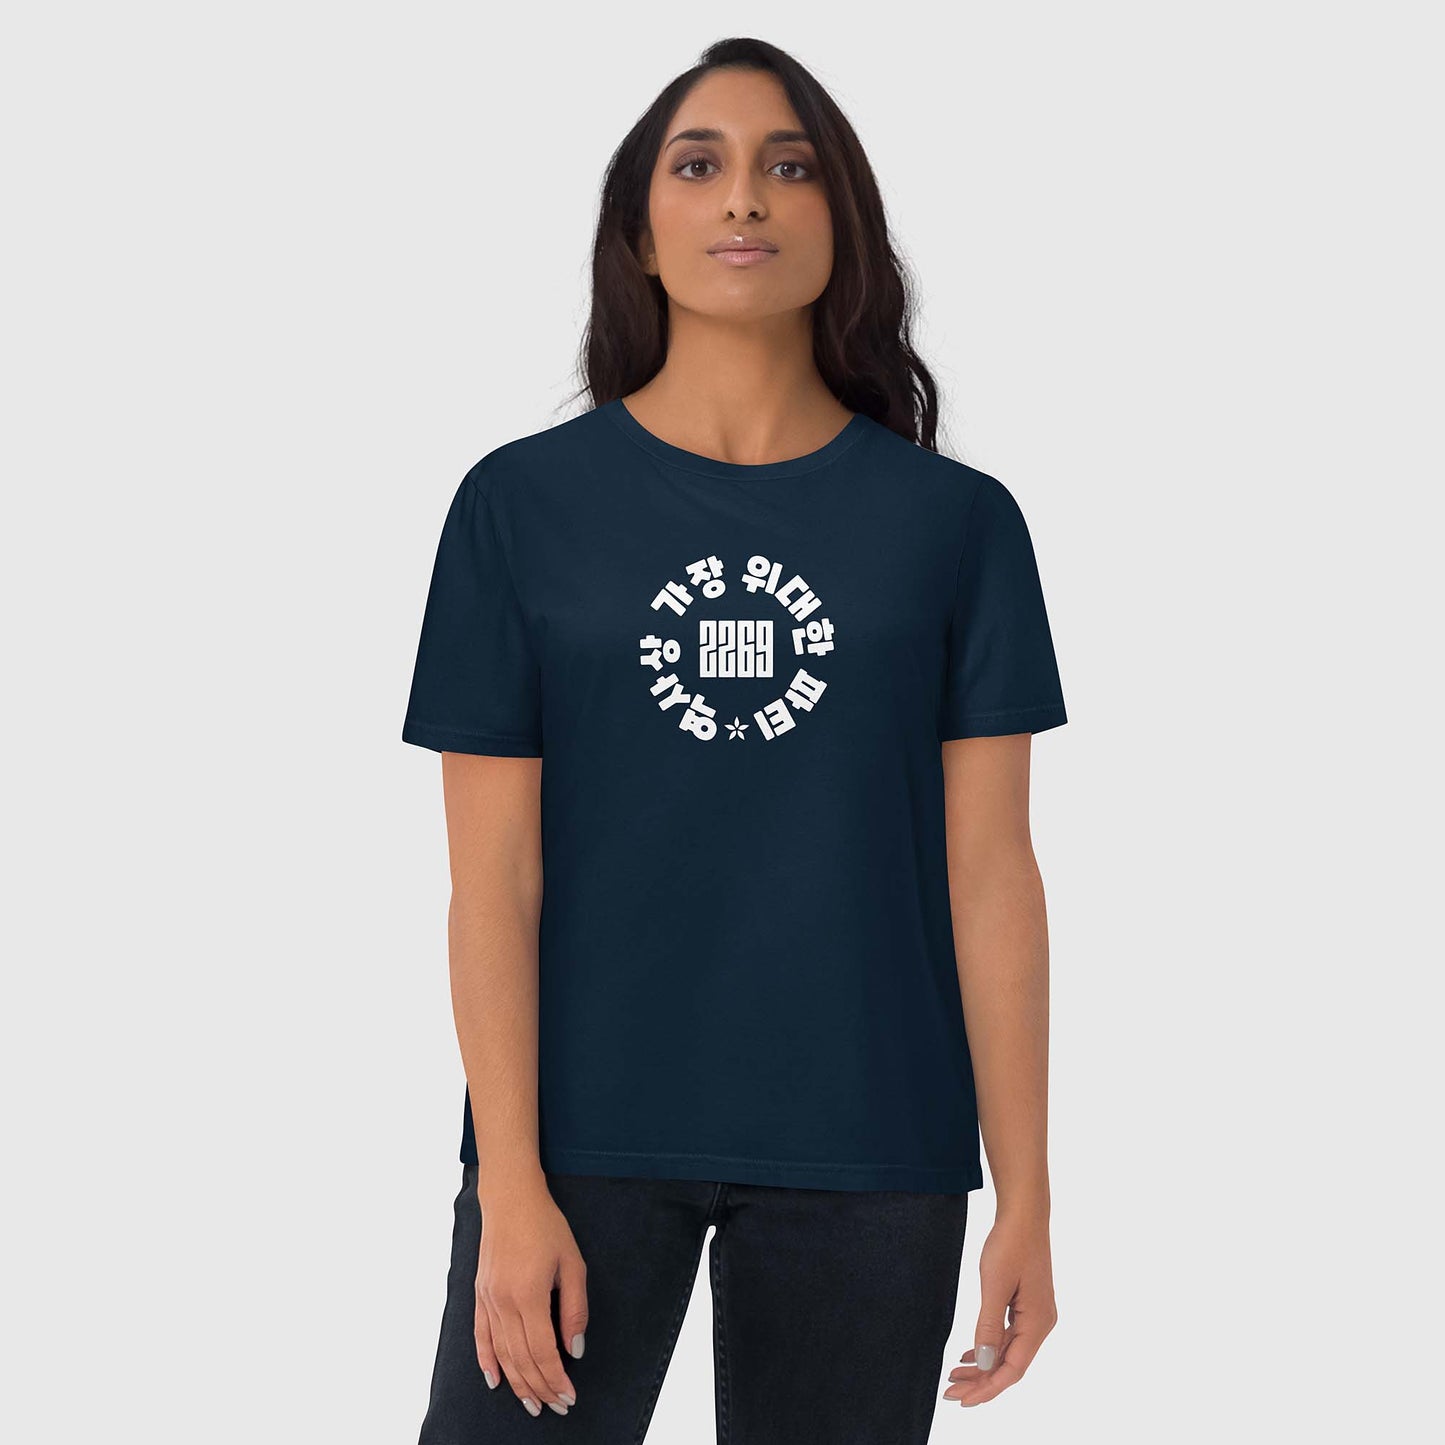 Unisex navy organic cotton t-shirt with Korean 2269 party circle